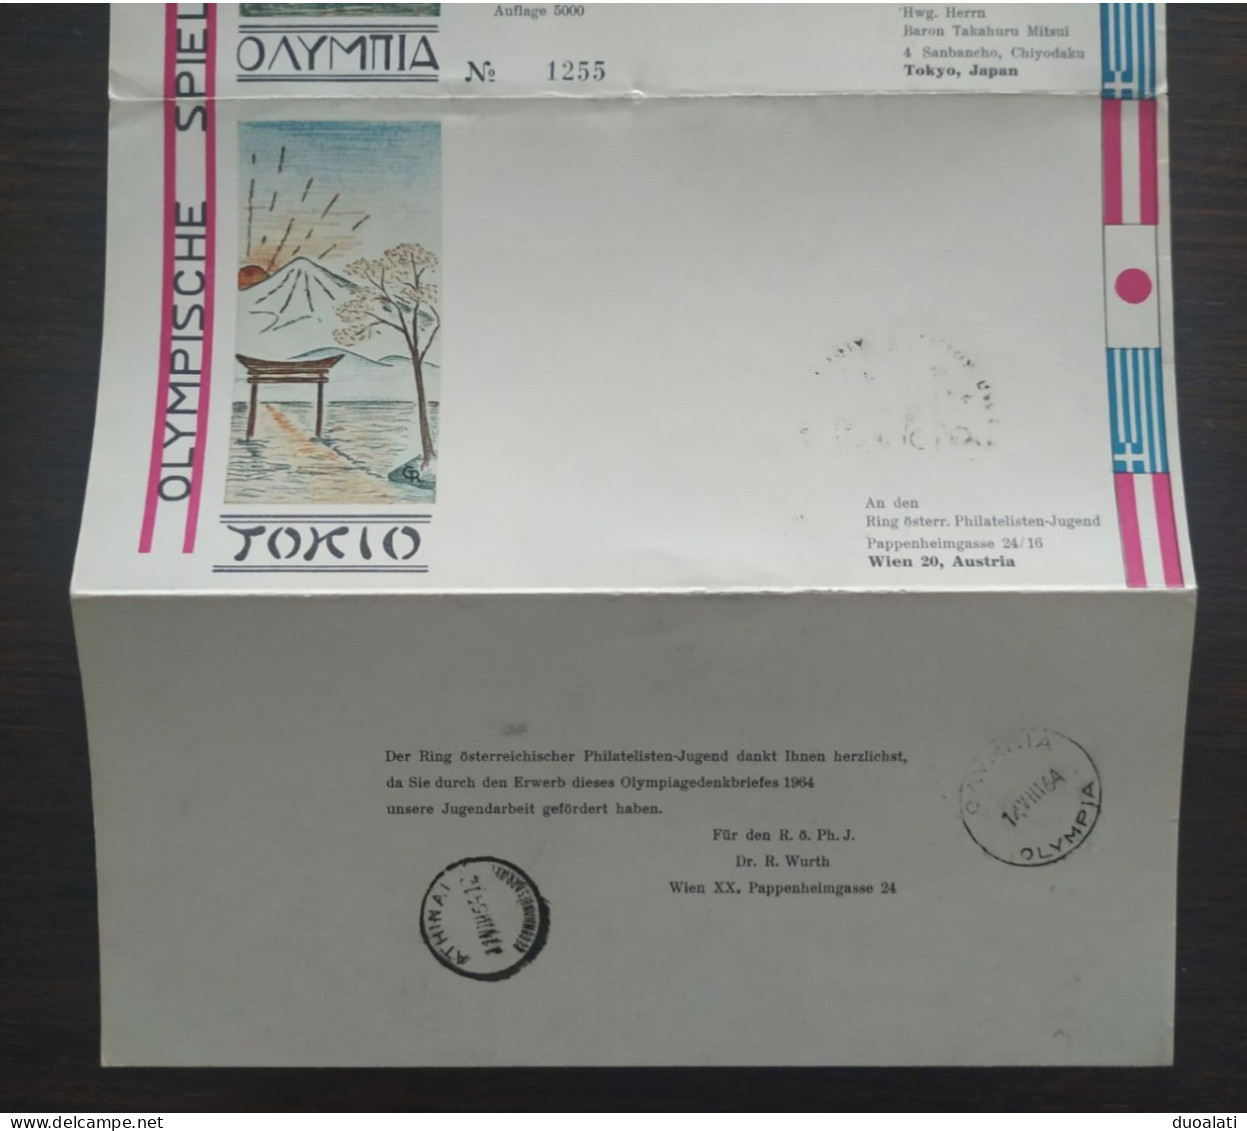 Greece Austria Olympia 1964 Olympic Games Innsbruck Tokyo Registered Folder Card Sent From Austria To Greece - Inverno1964: Innsbruck